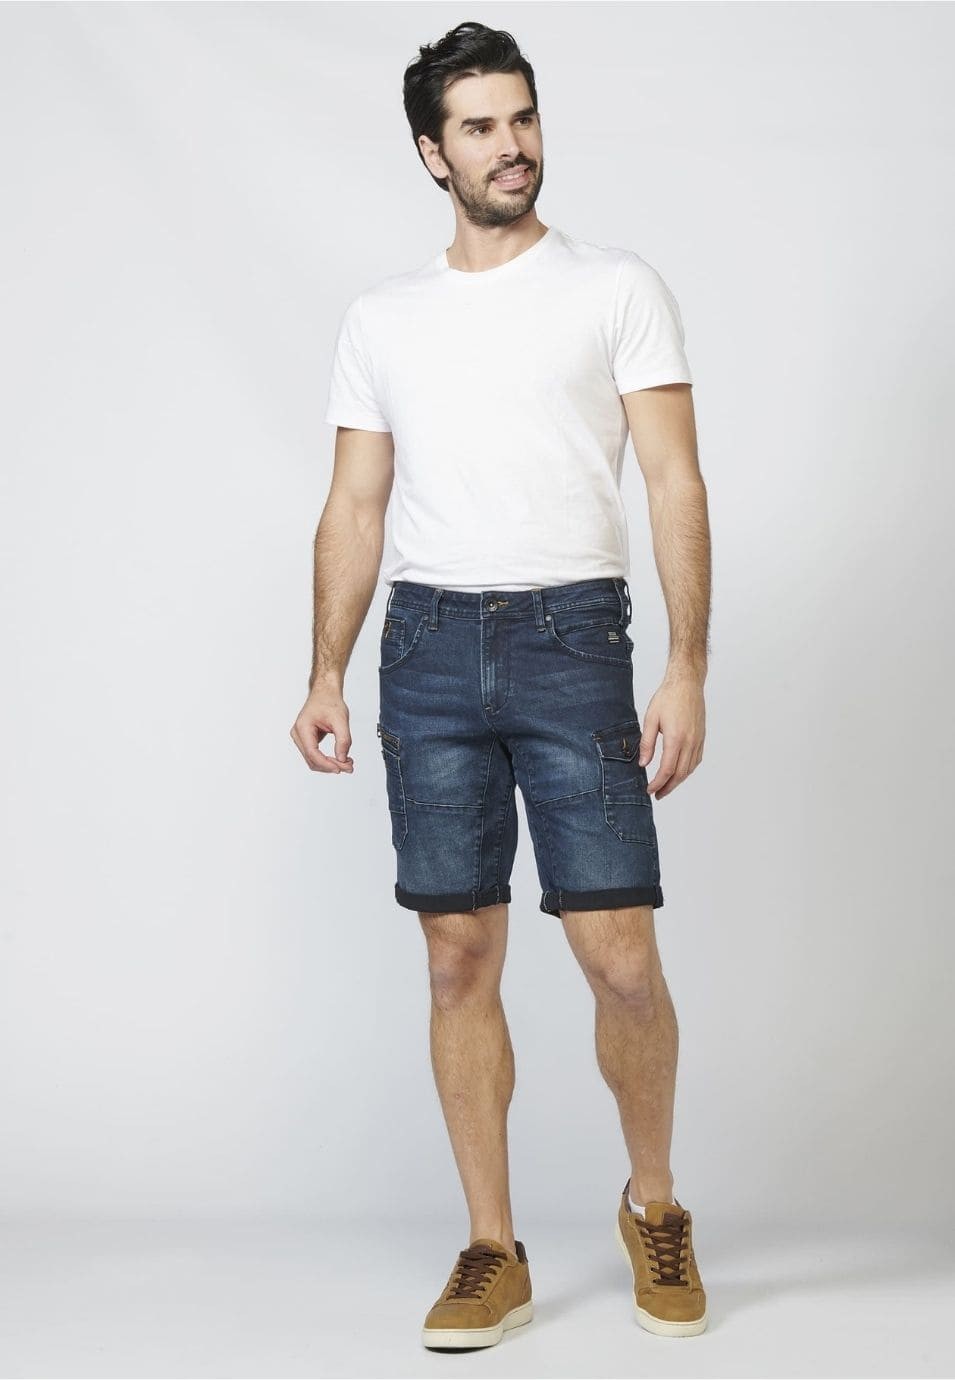 Pantalon corto denim cortes regular fit 2